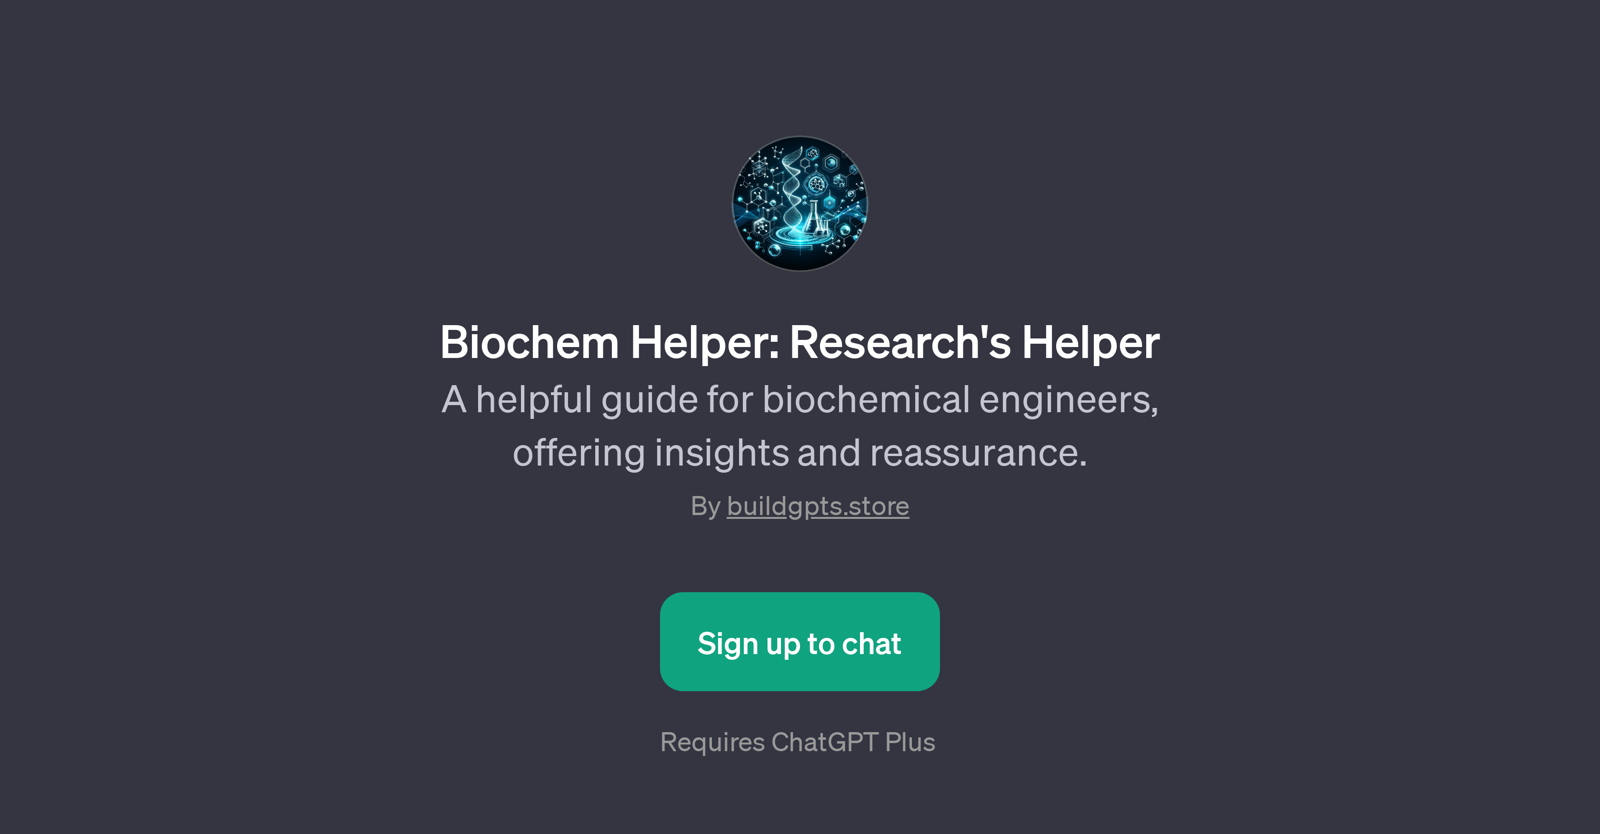 Biochem Helper: Research's Helper website